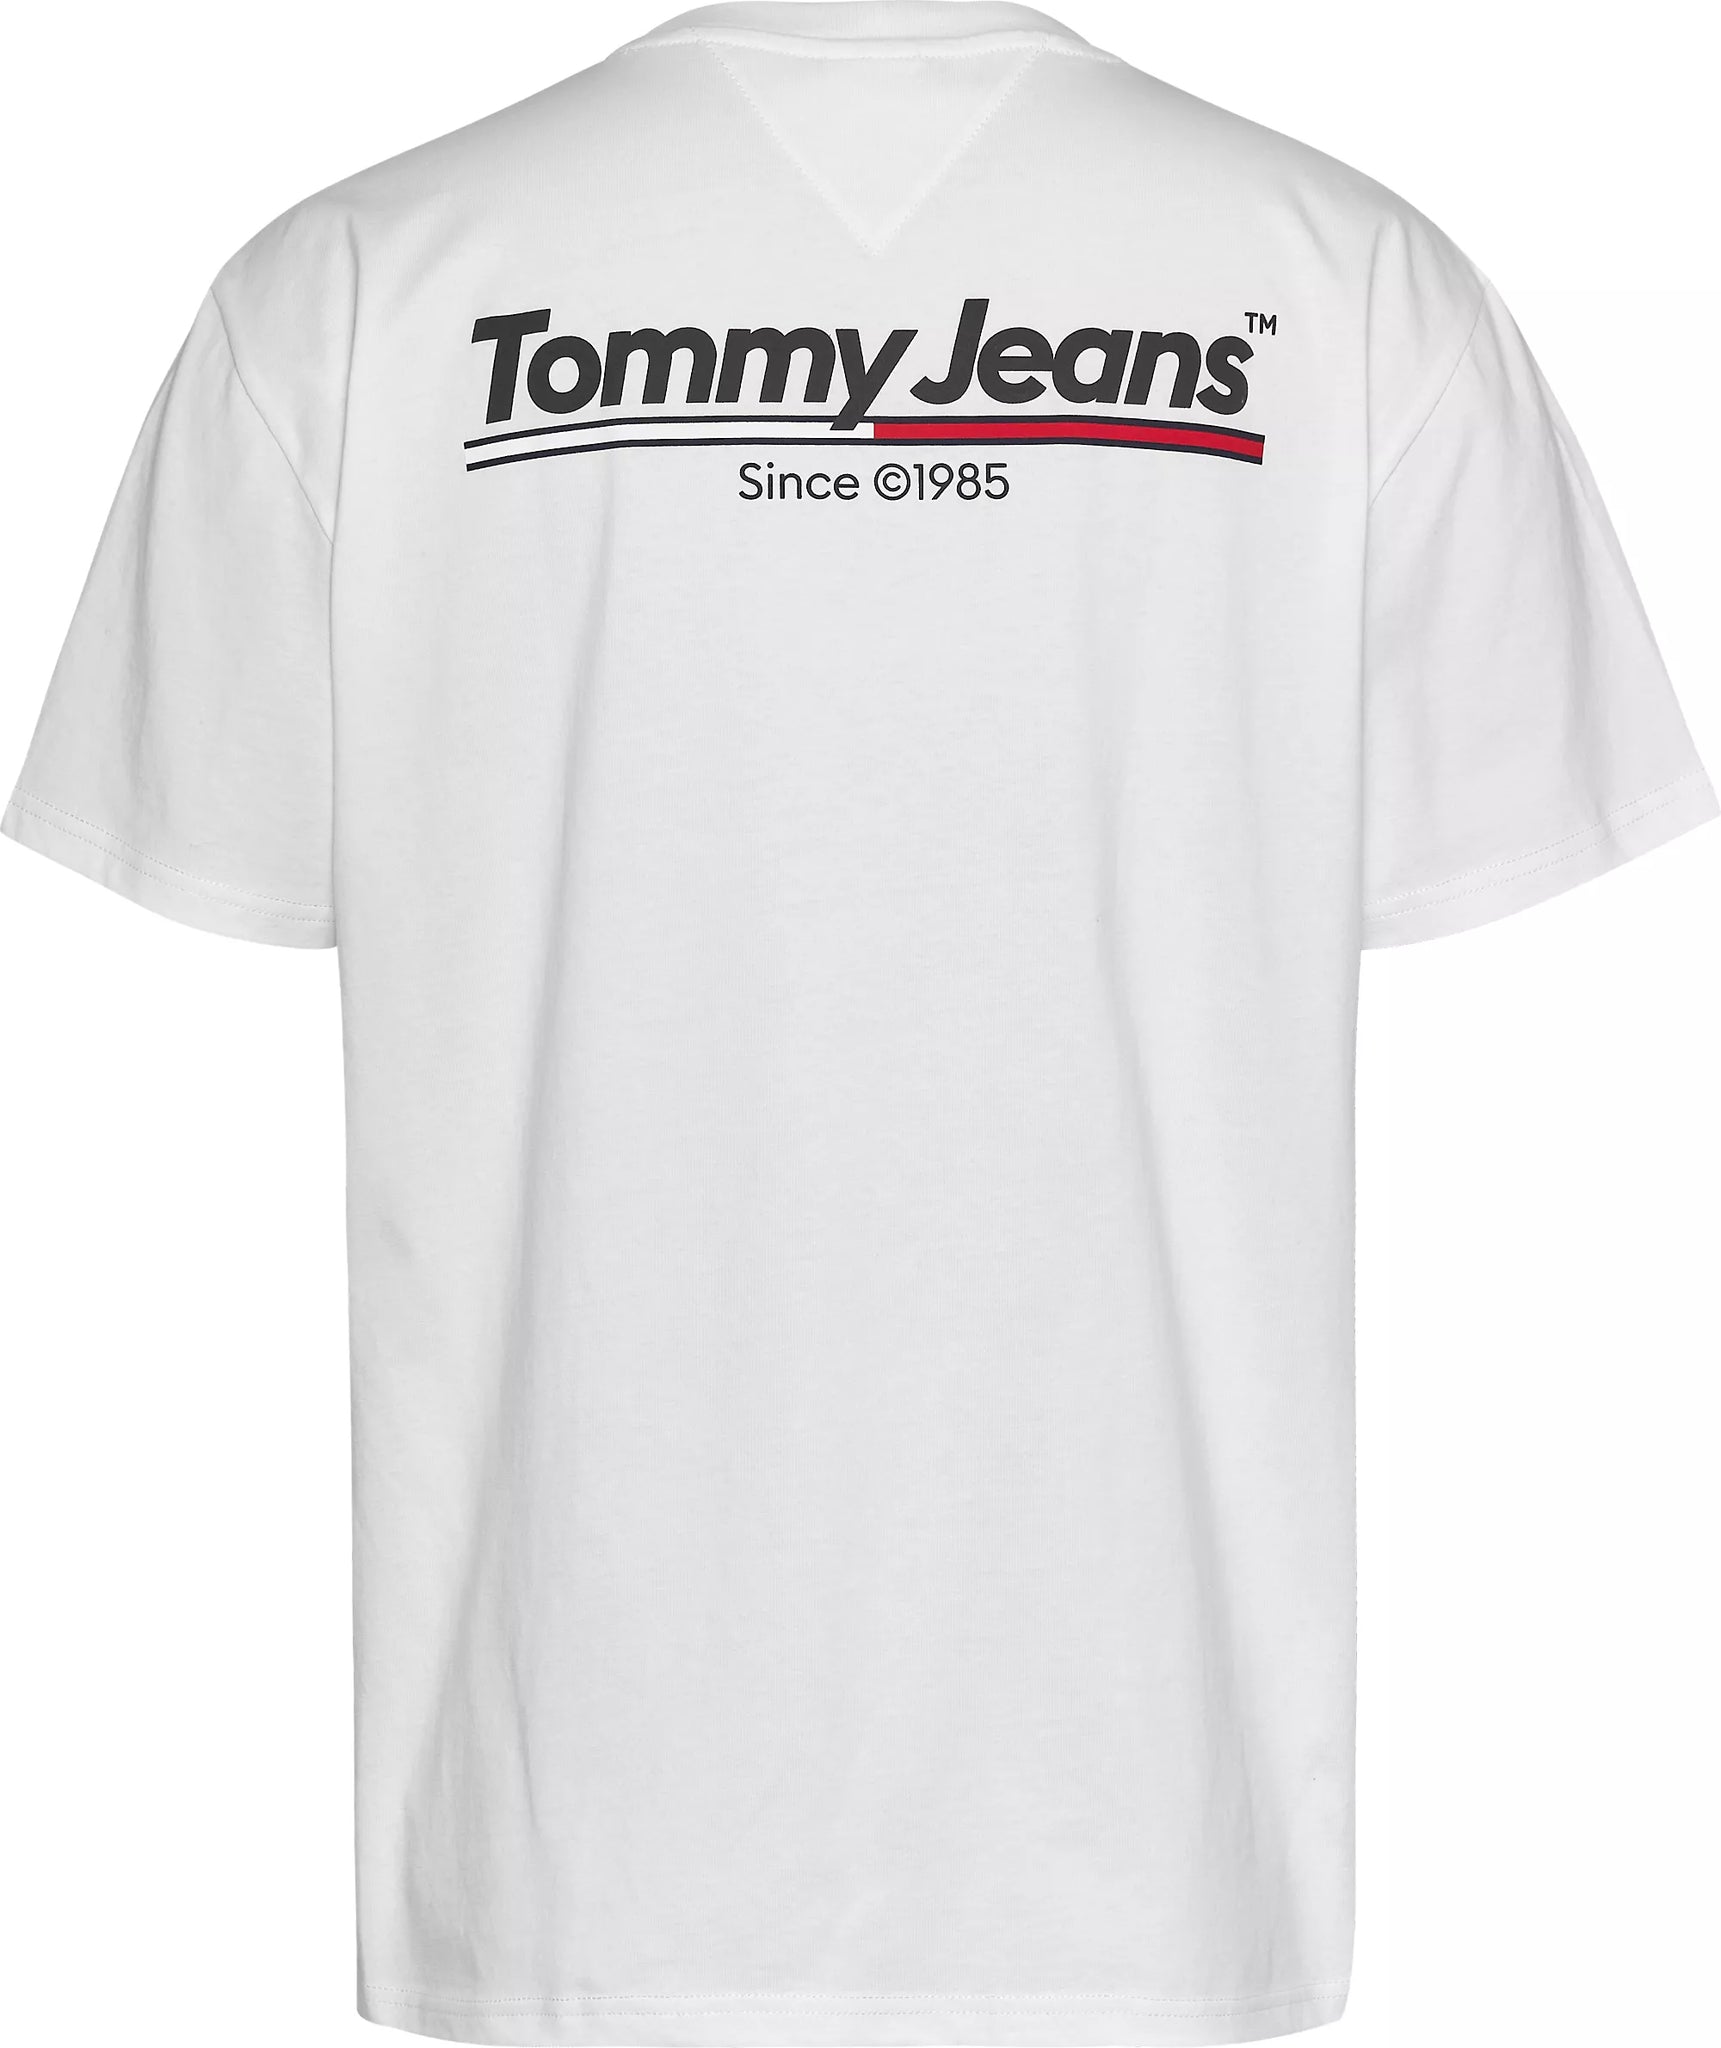 Camiseta Tommy Jeans Twist Flag